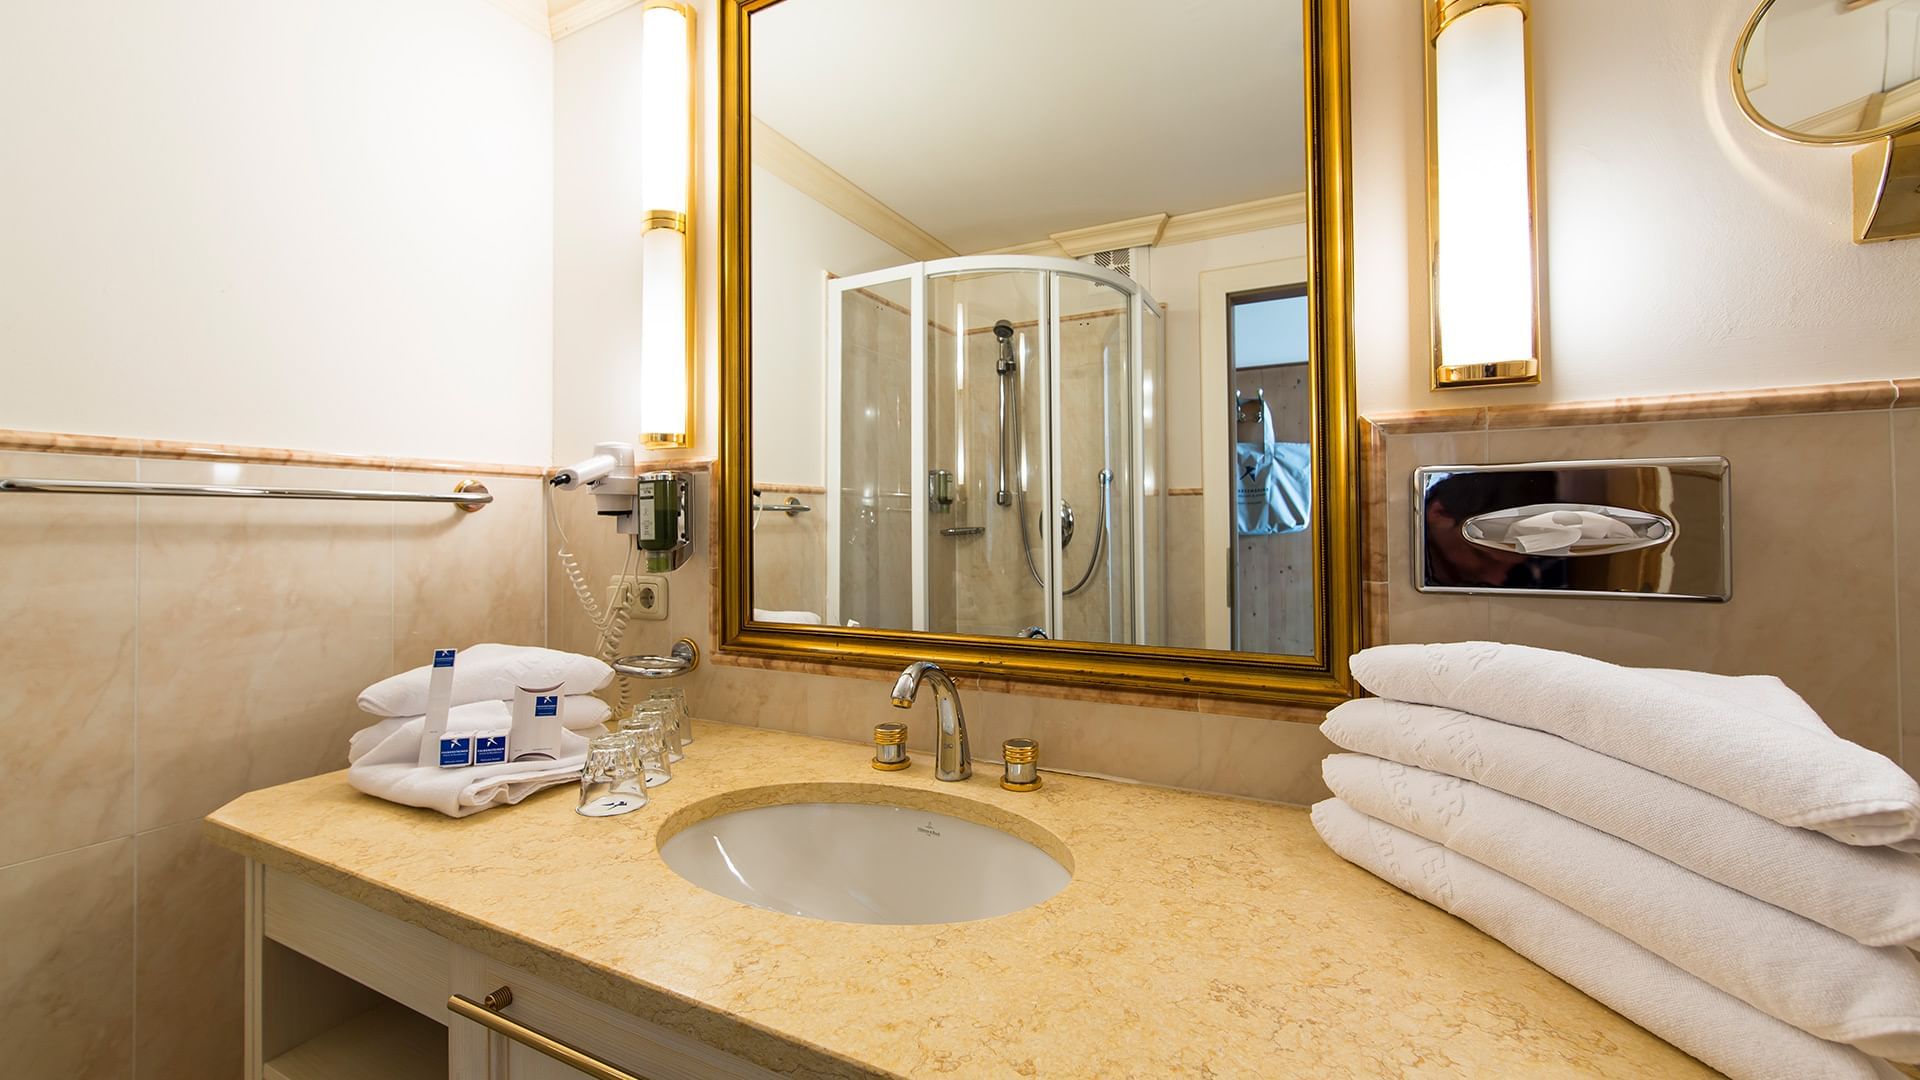 Bathroom vanity in Comfort Room at Falkensteiner Hotels